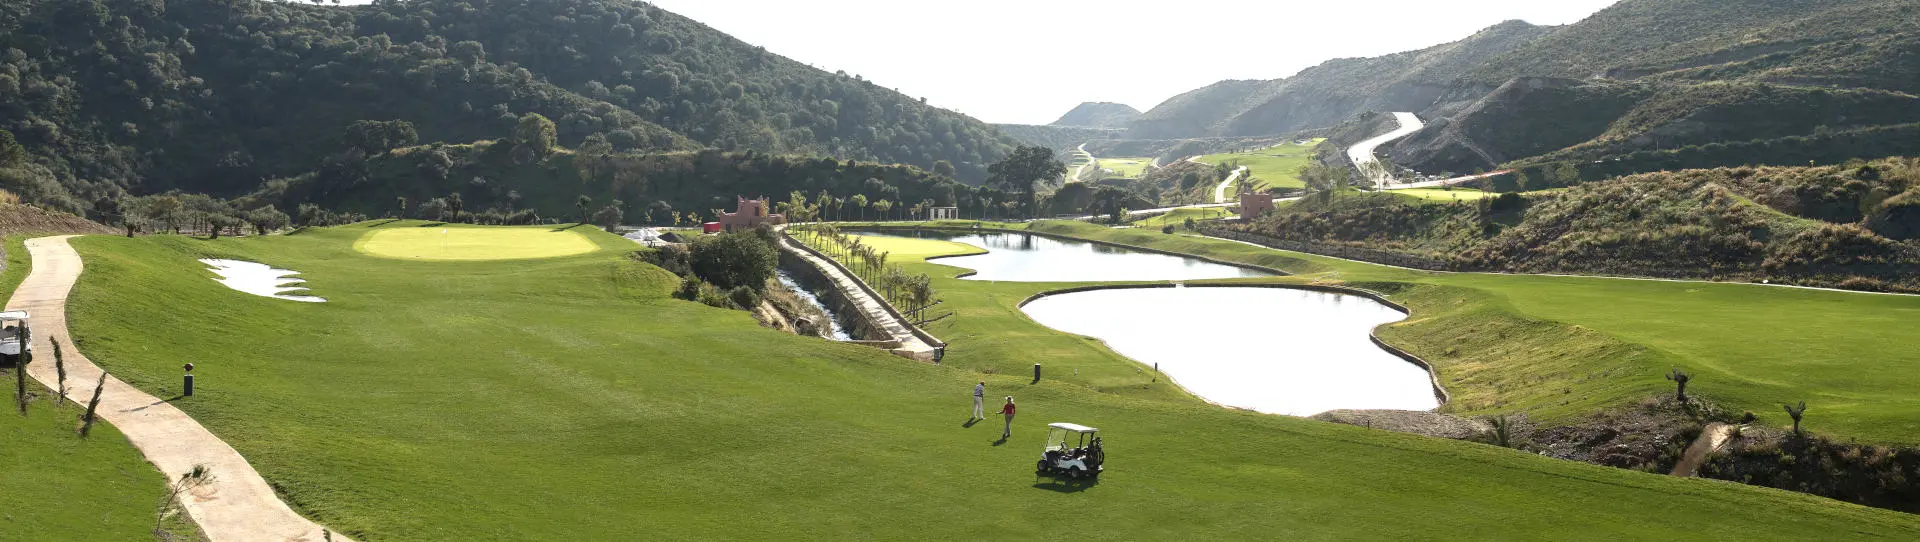 Spain golf holidays - Villa Padierna 2 Rounds Golf Pack - Photo 1